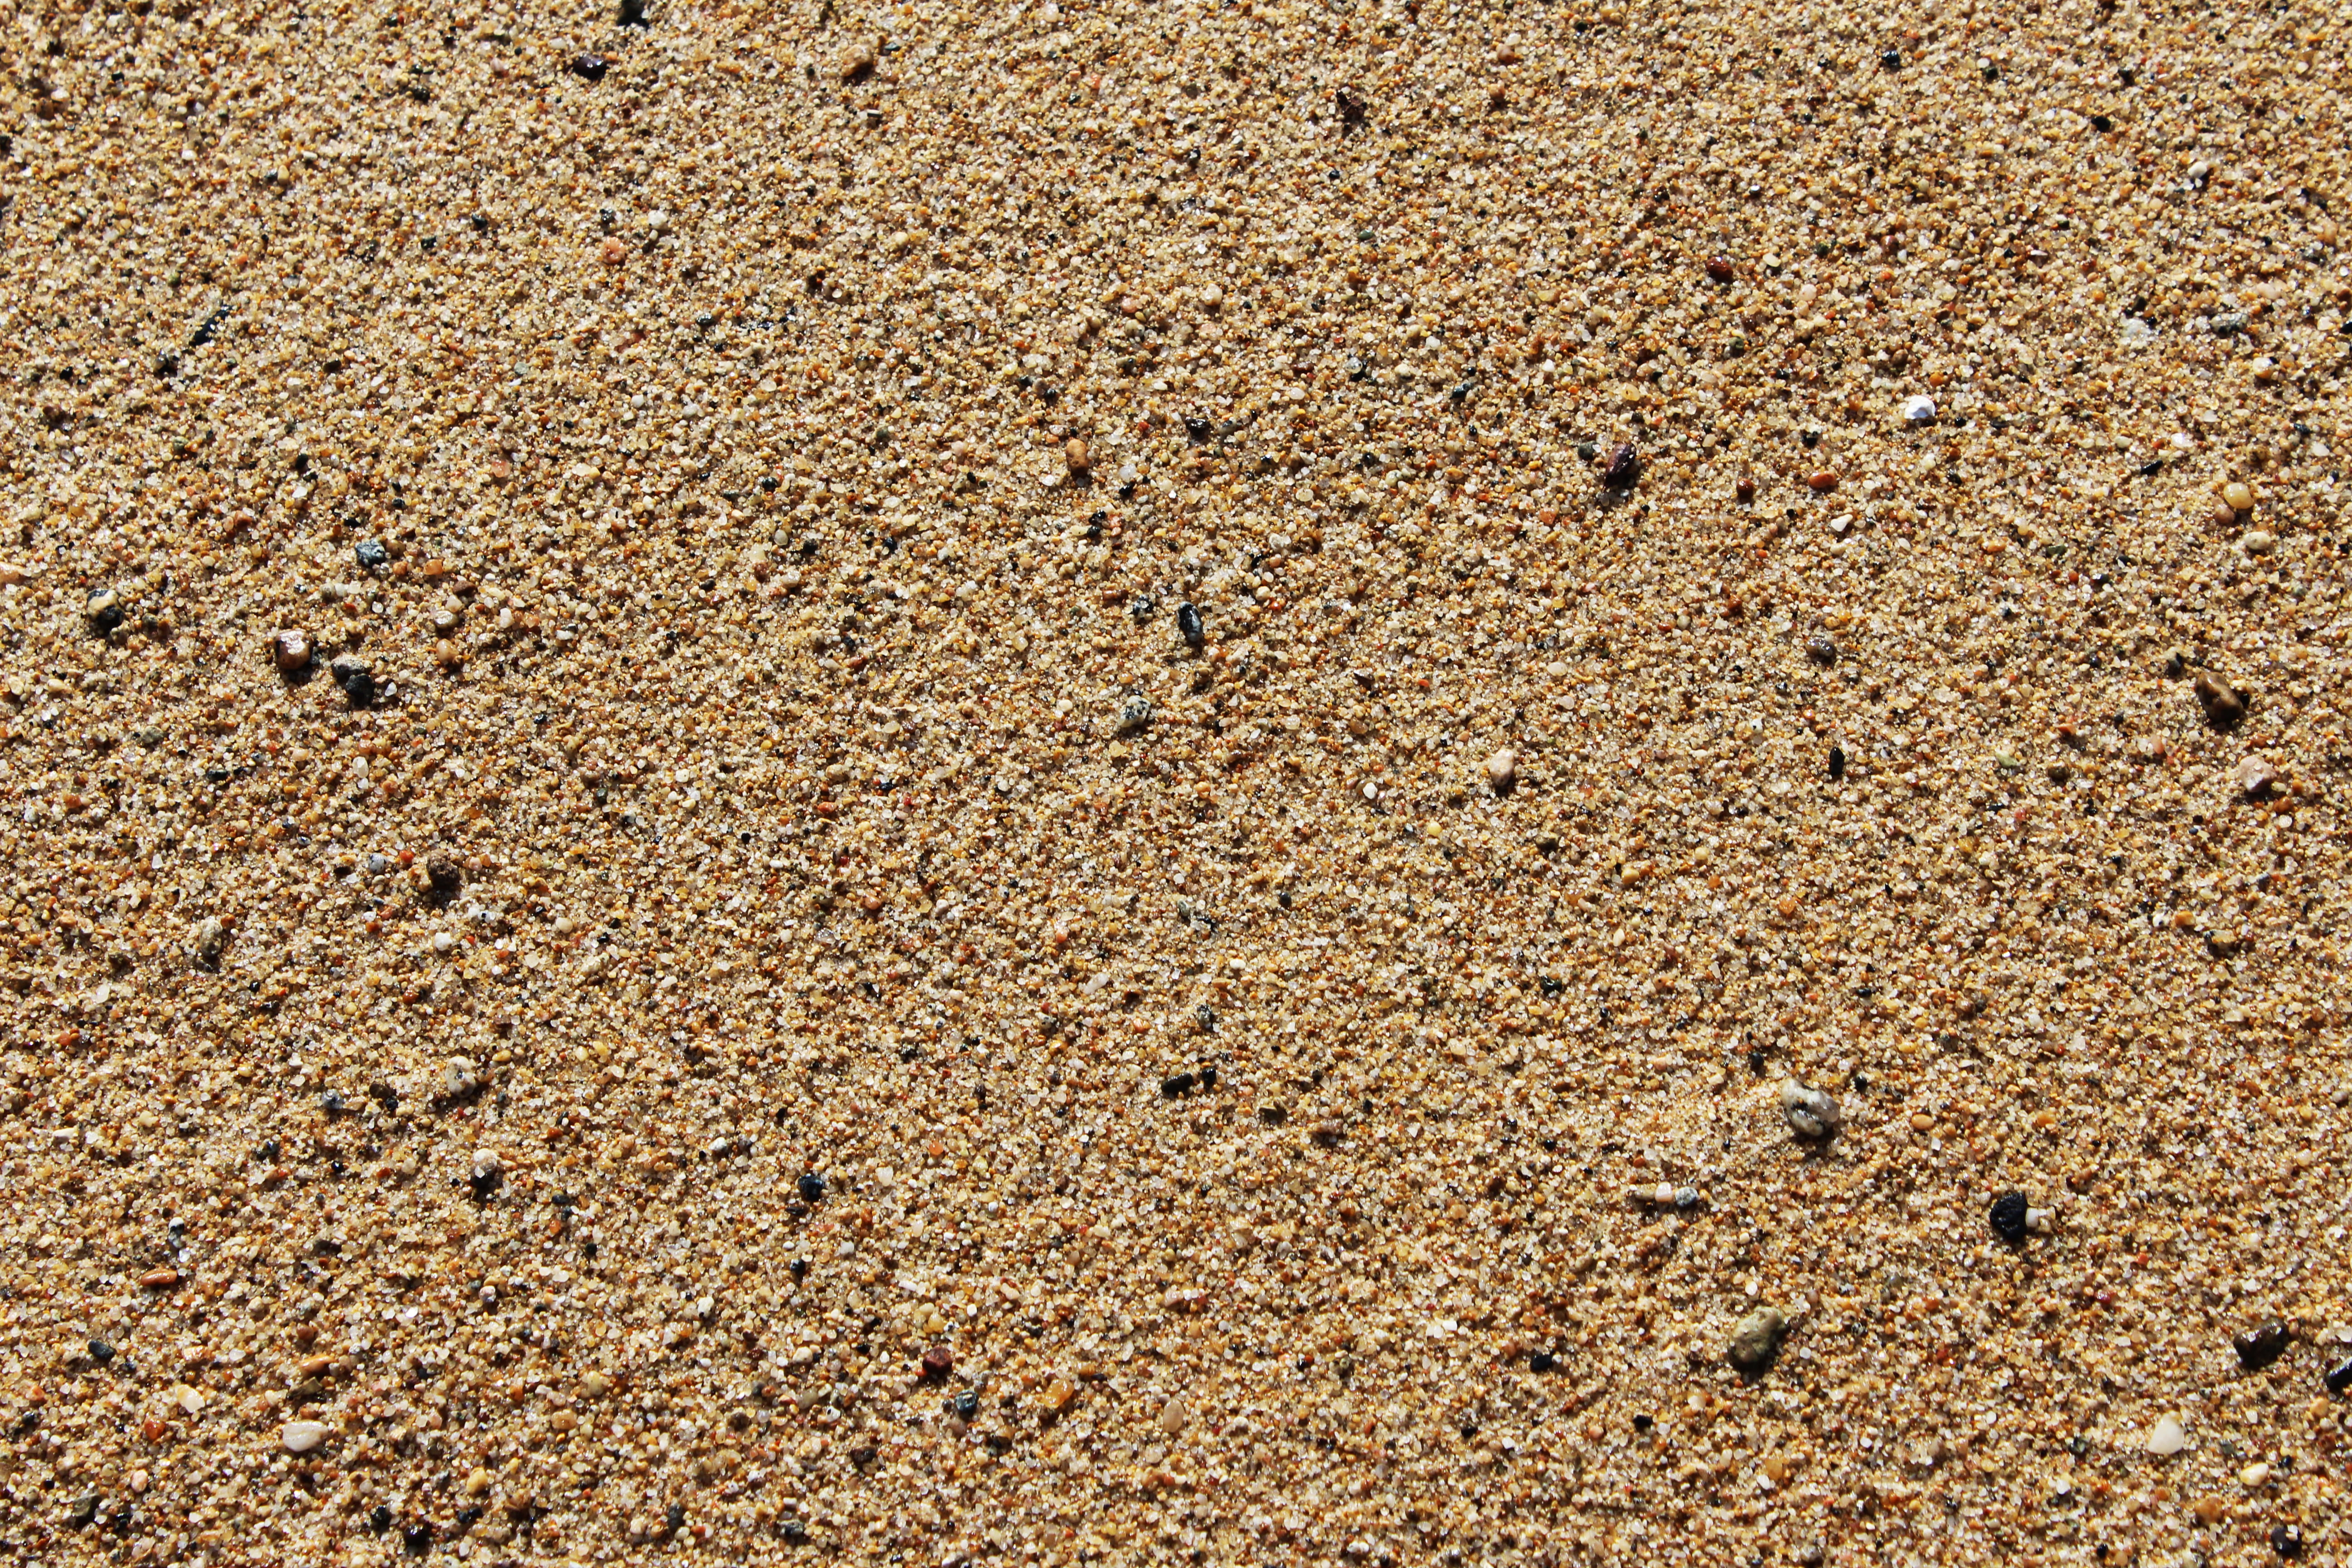 Brown Sand, art, background, beach, close-up, desert, dirty, dry